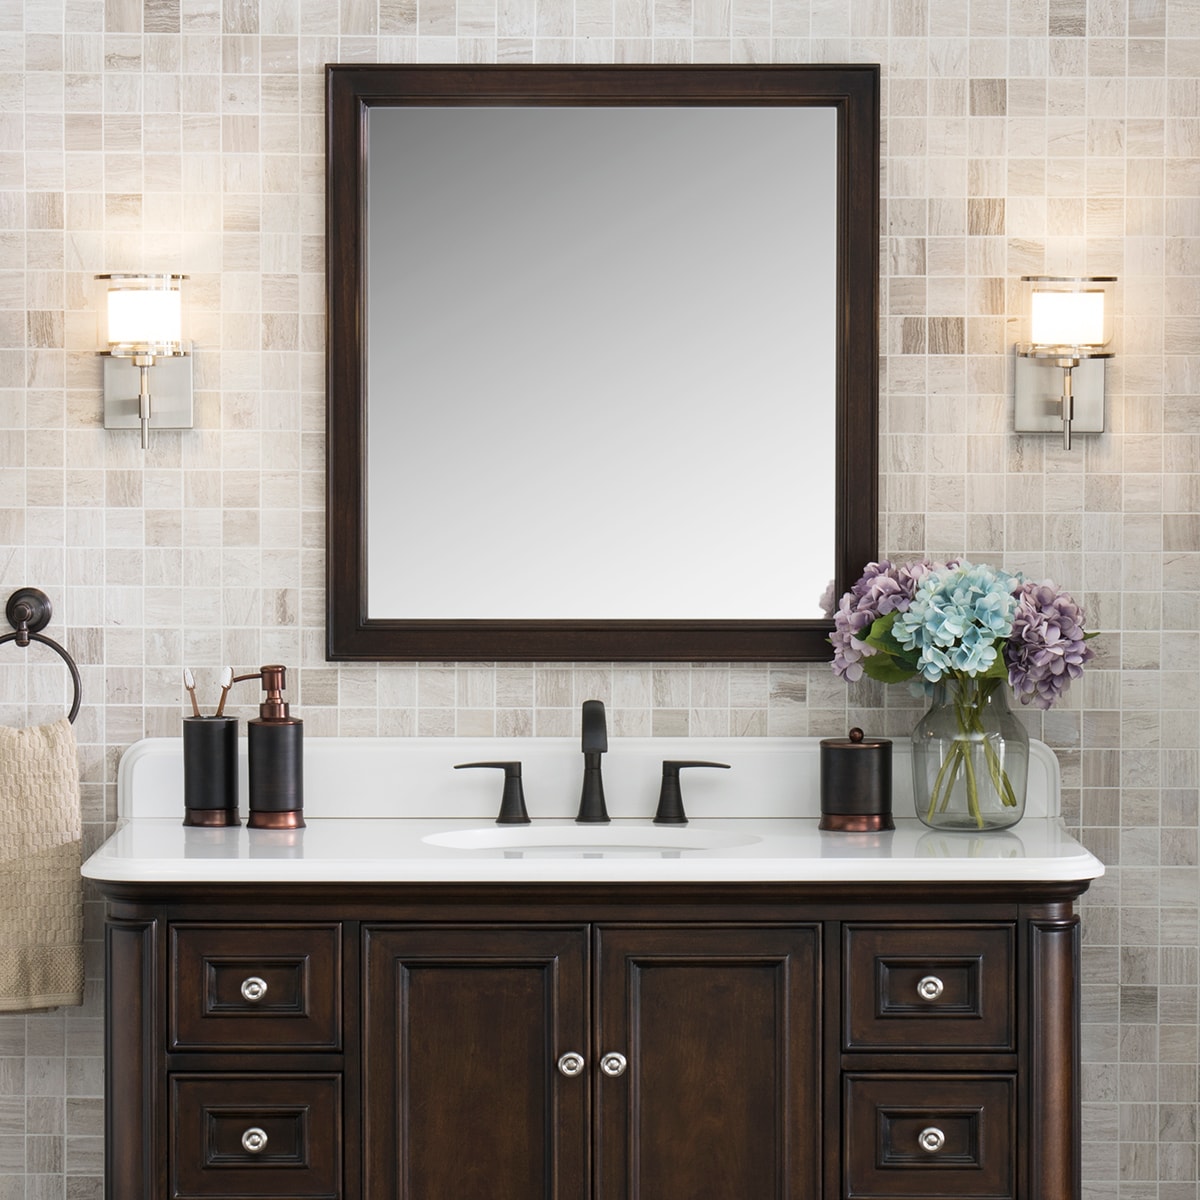 Wrightsville 28-in W x 30-in H Mahogany Rectangular Framed Bathroom Mirror in Brown | - allen + roth 1116MR-28-202